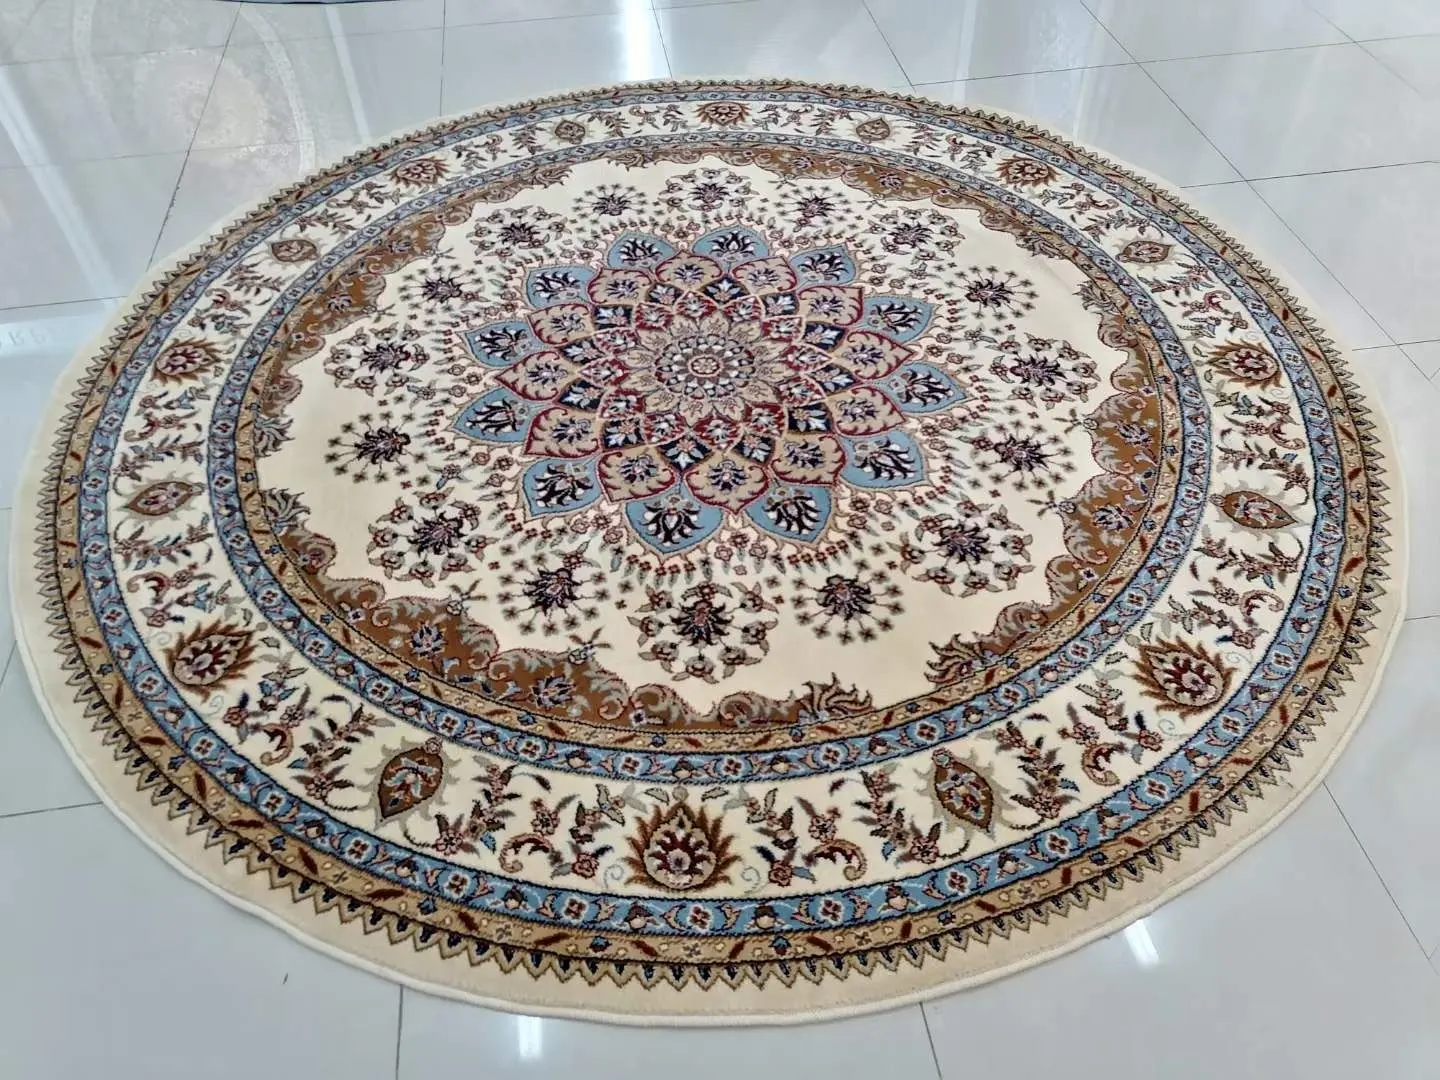 Sala de estar uso doméstico poliéster peludo esponjoso impreso alfombras alfombra tradicional